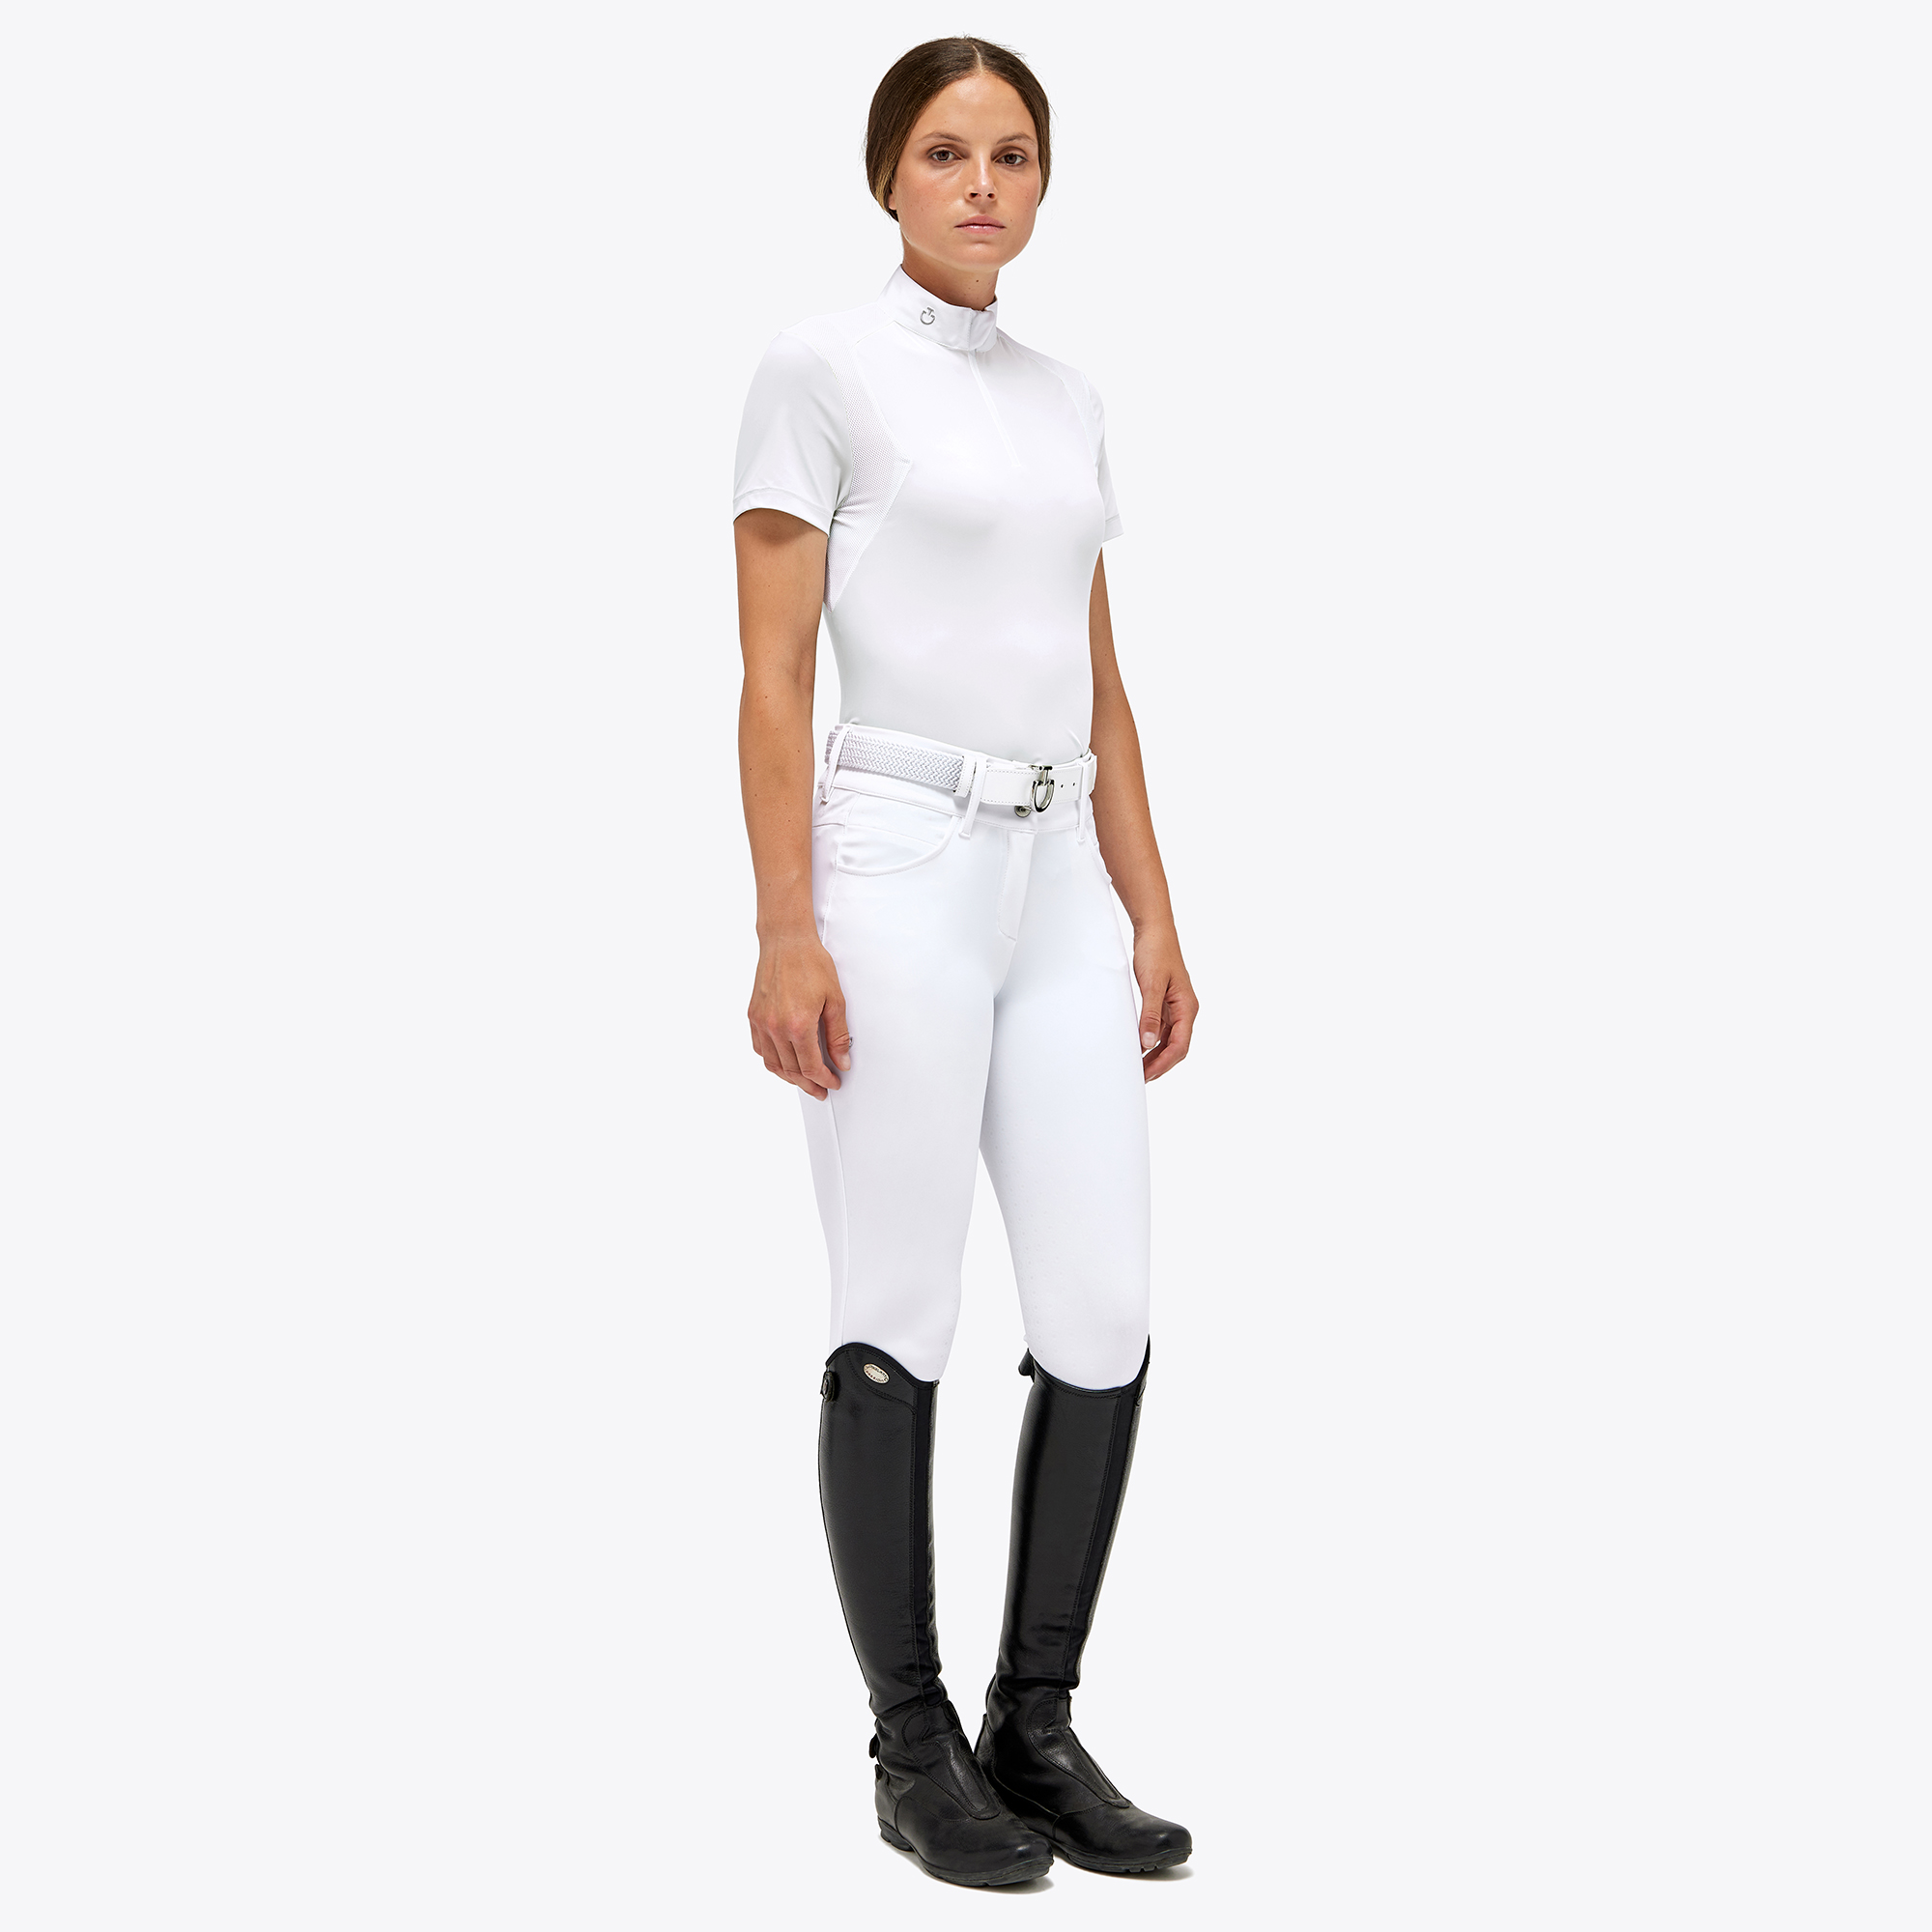 CAVALLERIA TOSCANA elegantes Damen Kurzarm Turniershirt Jersey Mesh - white/knit - XL - 1